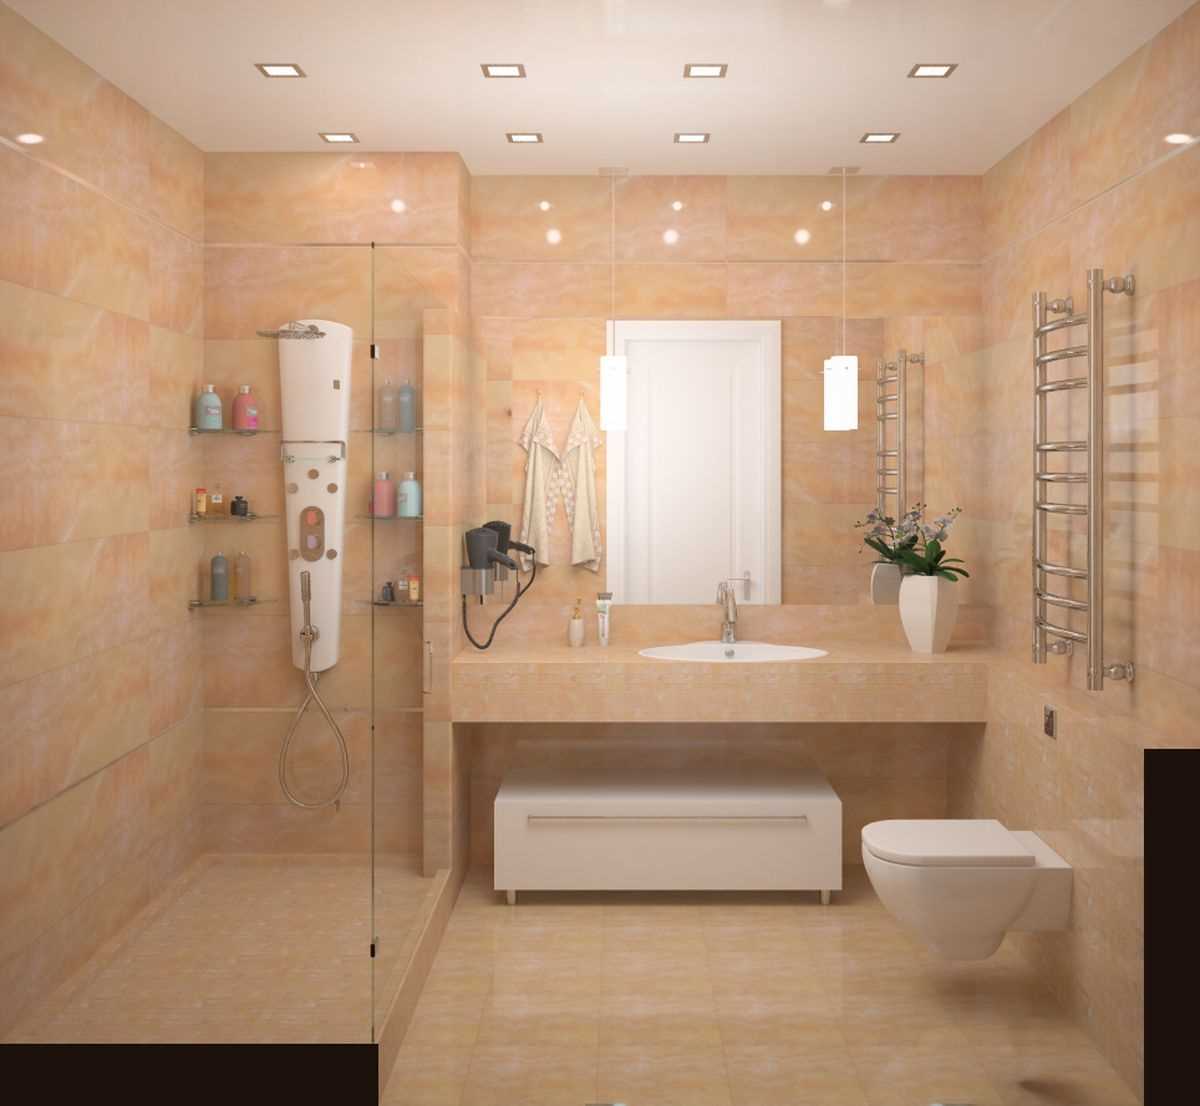 version du design original de la salle de bain